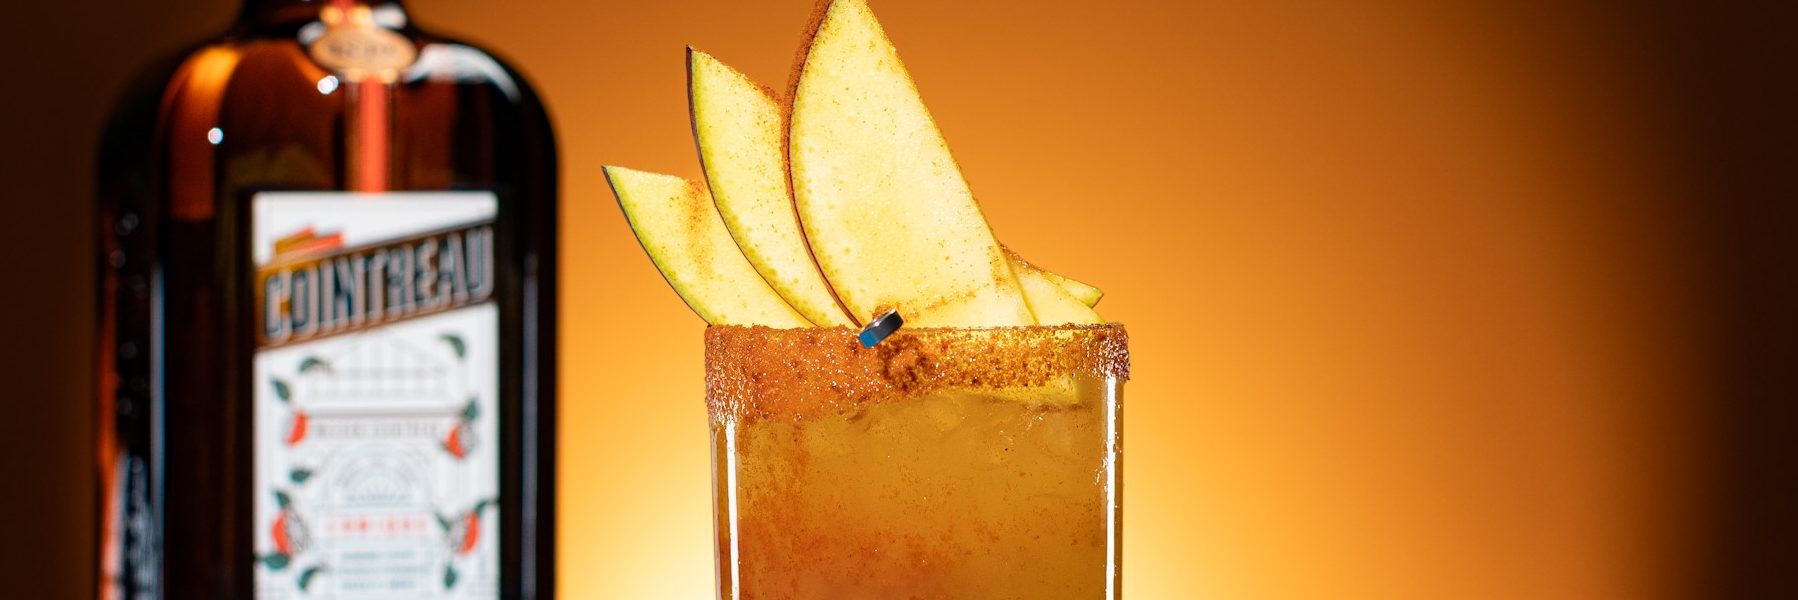 Cointreau Spicy Mango Margarita in short glass with apple garnish and Cointreau bottle on orange background